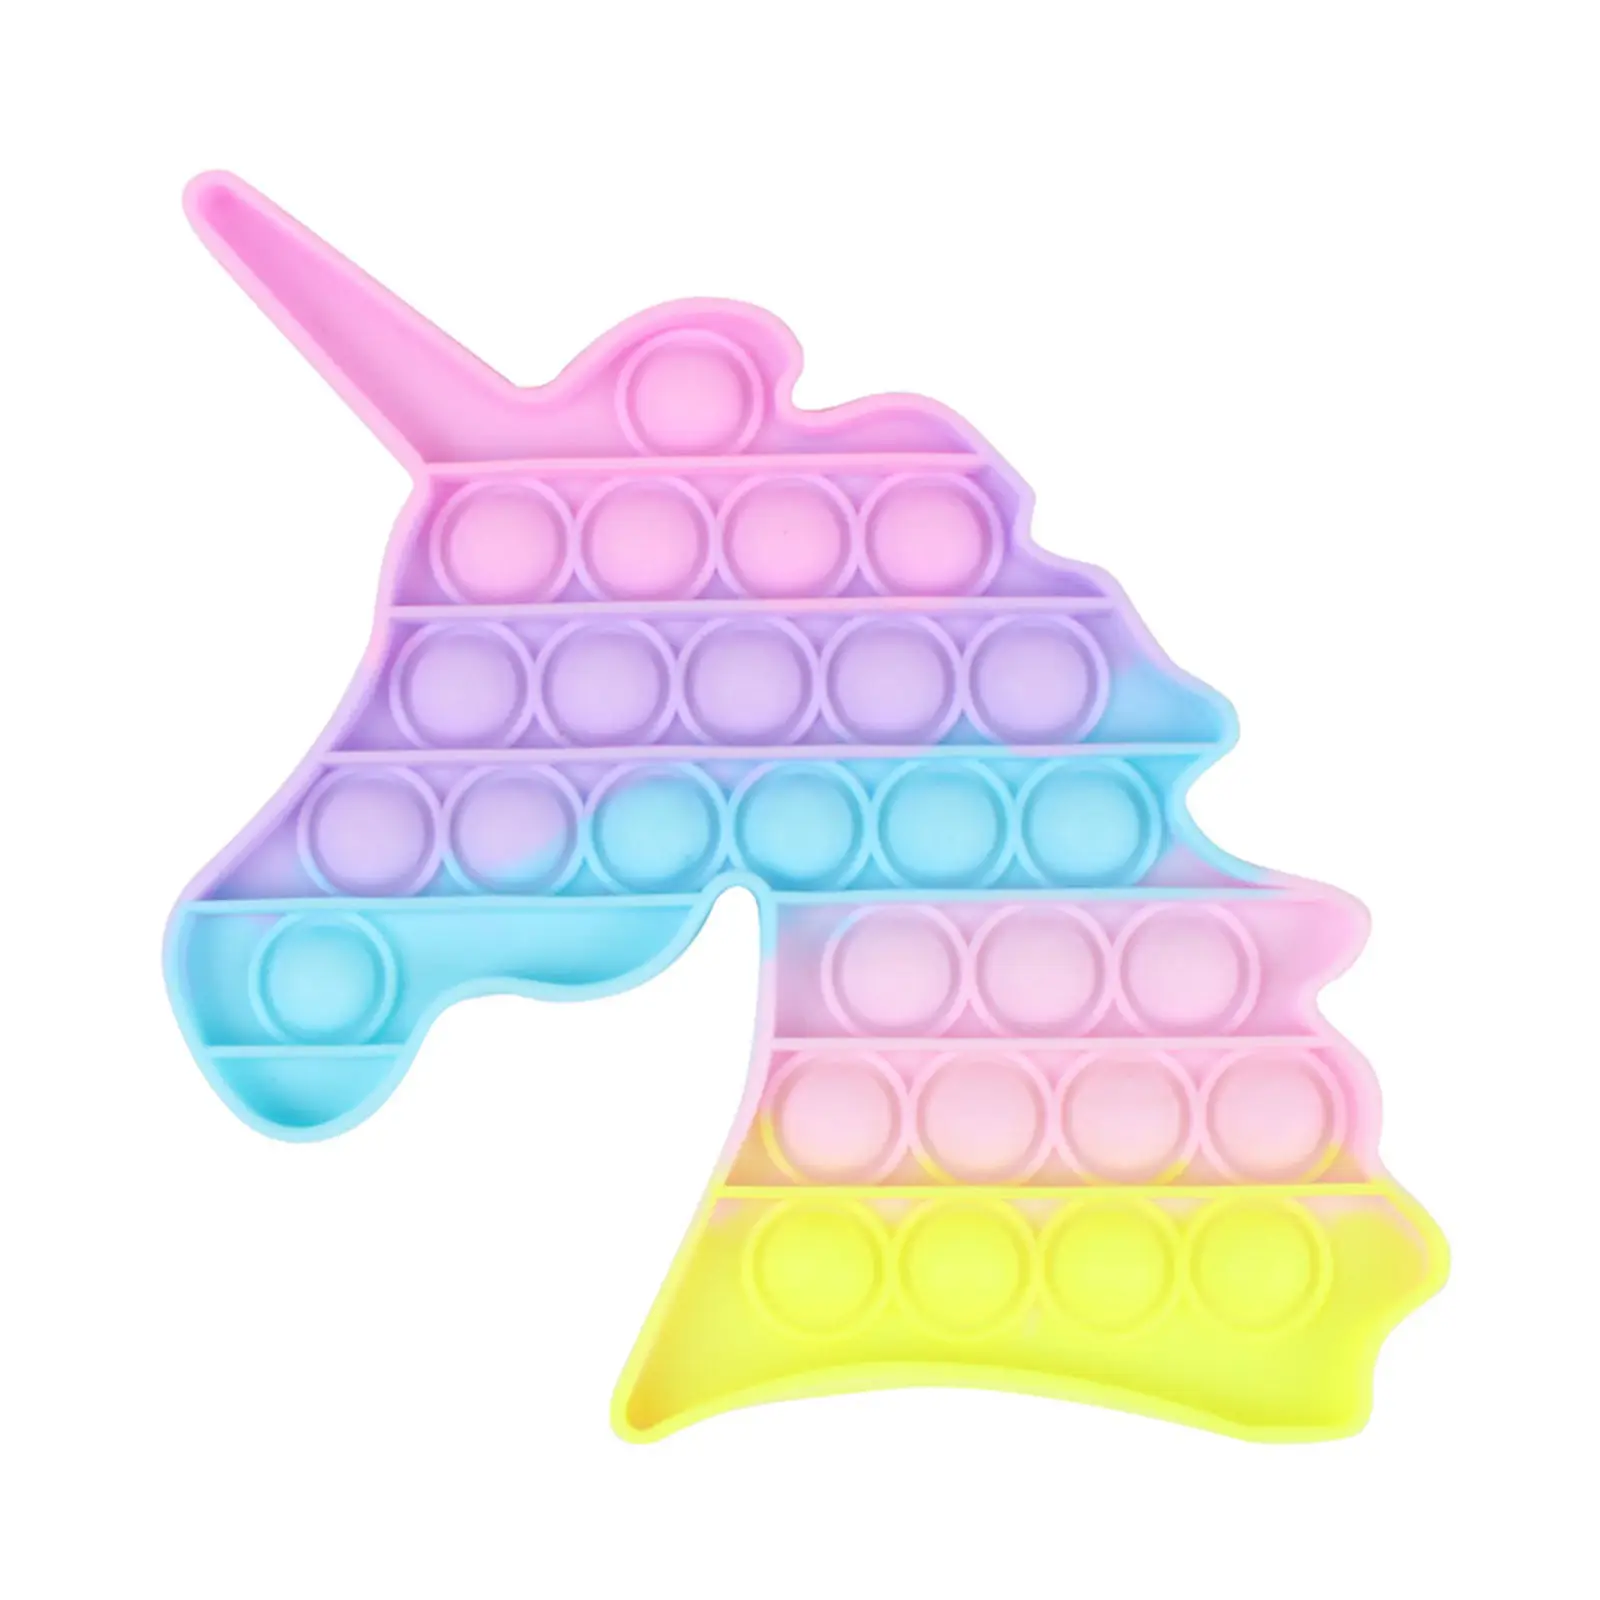 Hot selling Unicorn Dinosaur Push Popping Game Silicone Rainbow Educational Bubble Stress Ball Push Pop Sensory Fidget Toy